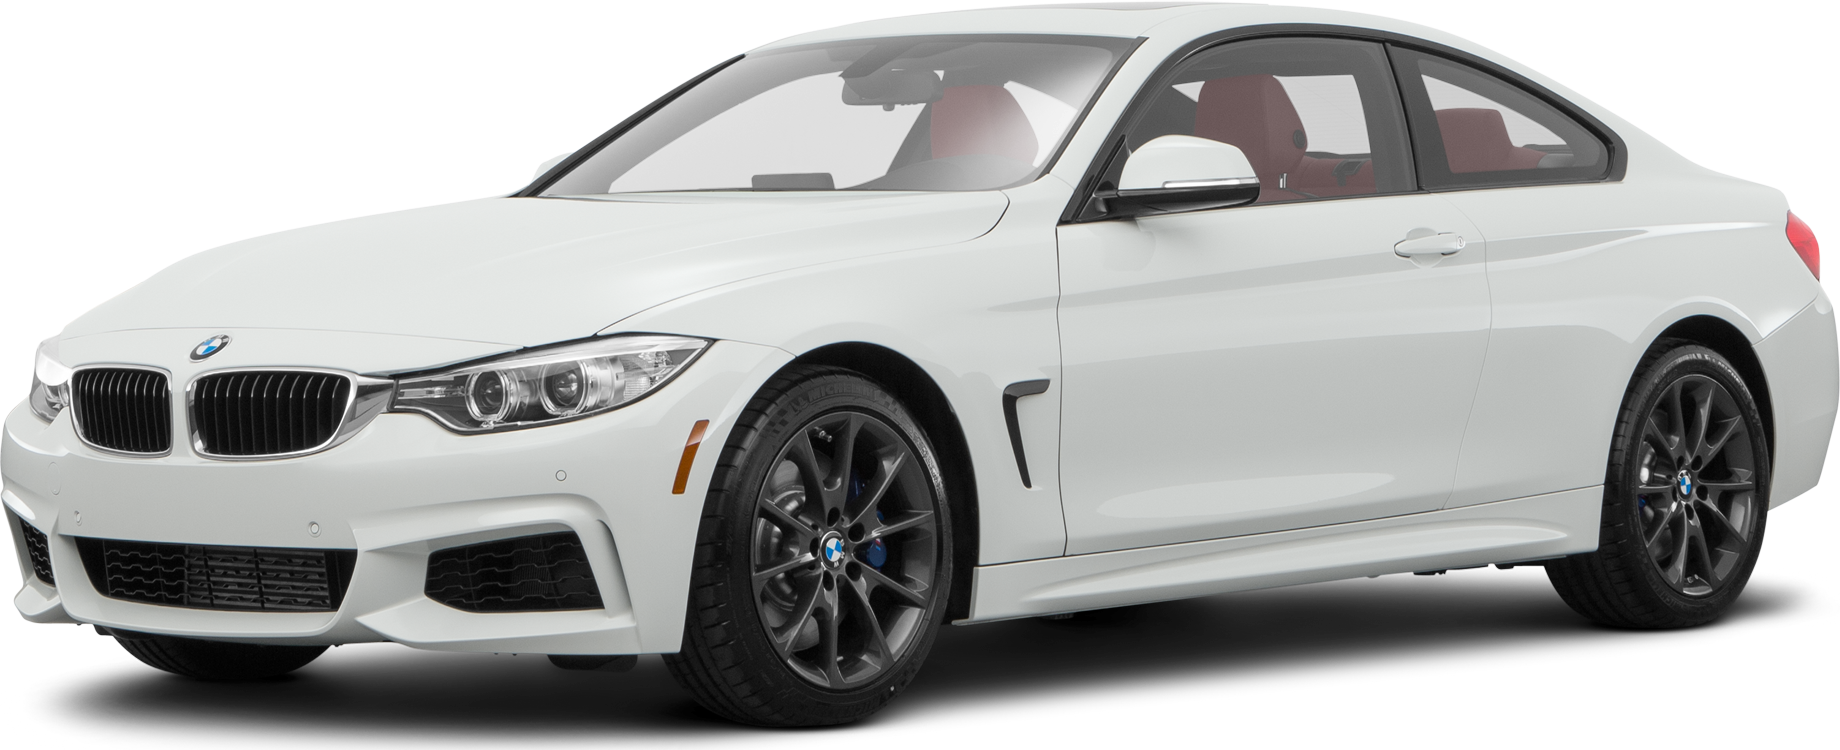 2016 BMW 4 Series Price, Value, Ratings & Reviews